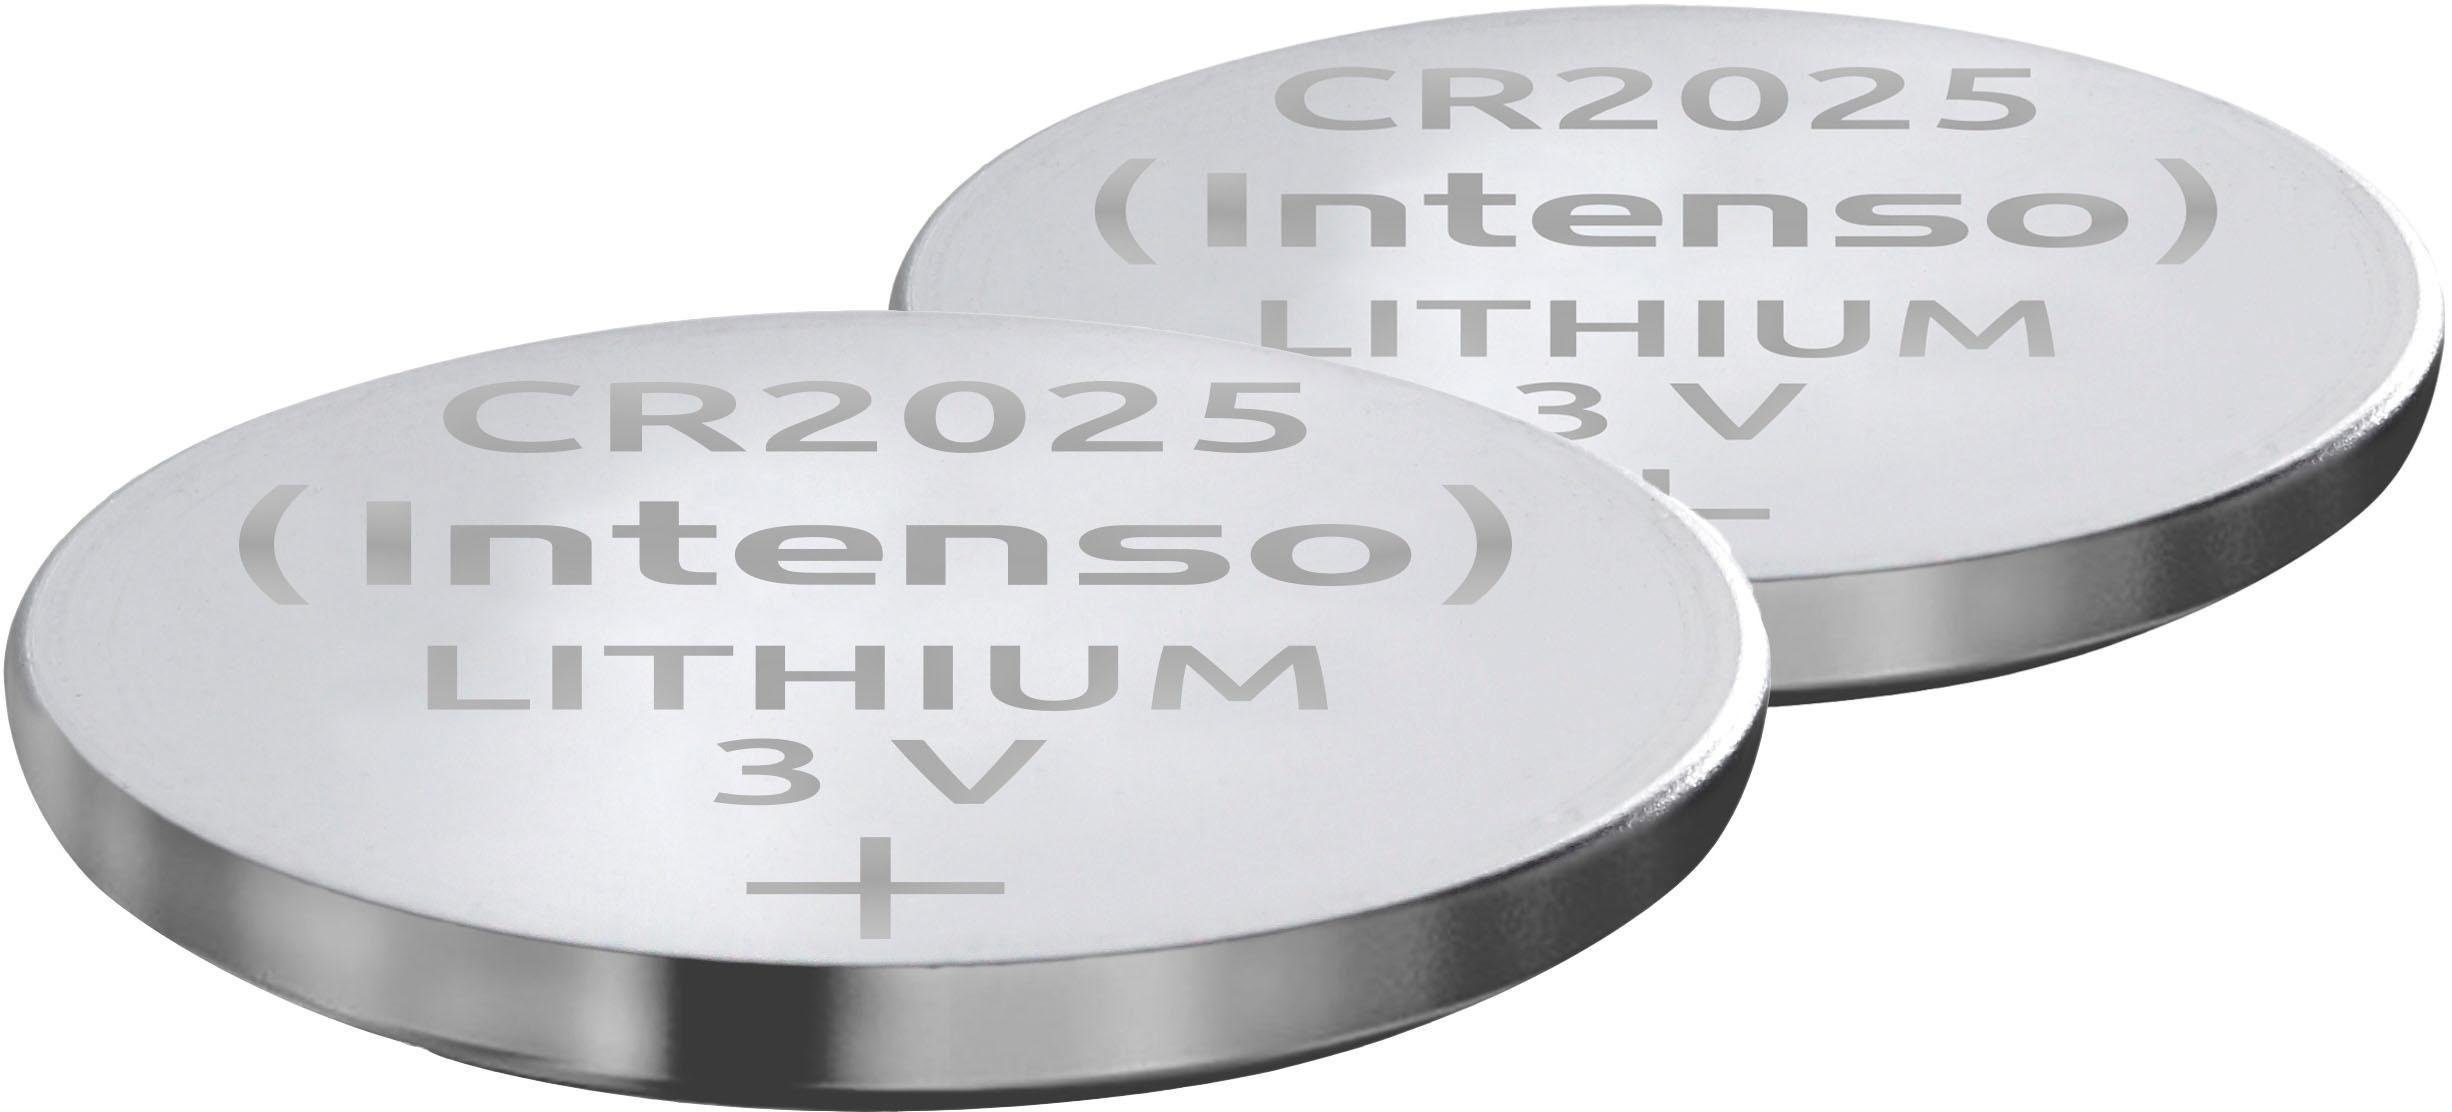 CR Intenso 2er St) Energy Ultra Knopfzelle, Pack 2025 (2